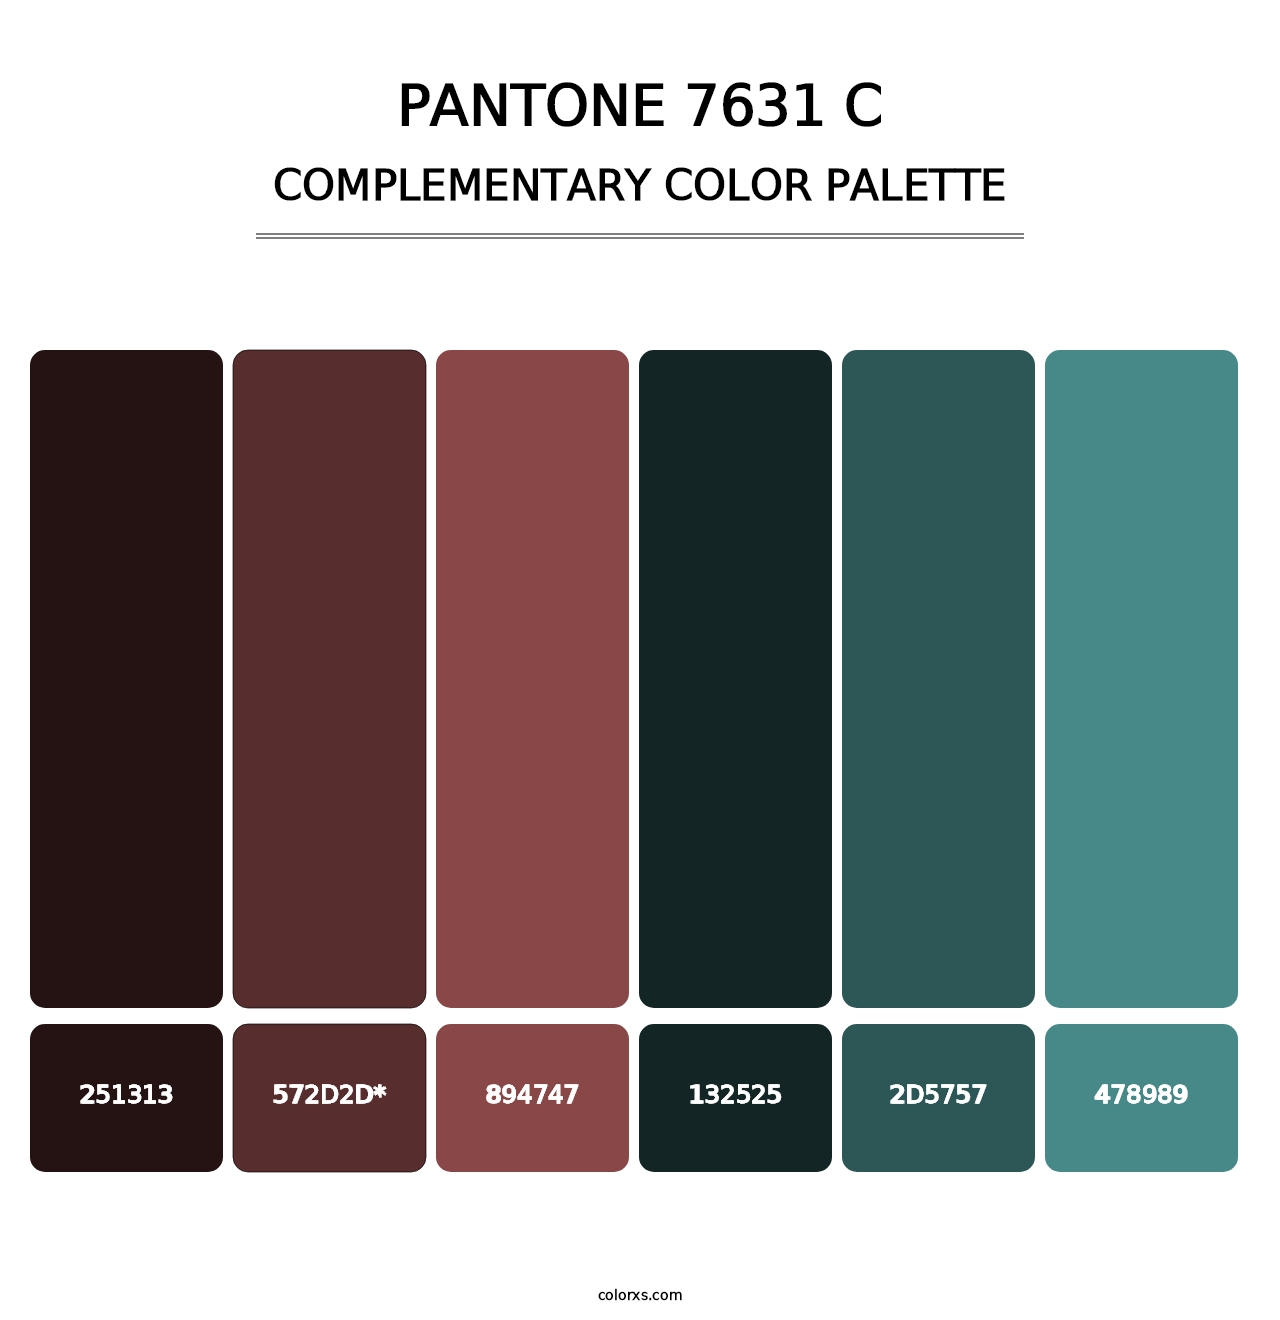 PANTONE 7631 C - Complementary Color Palette